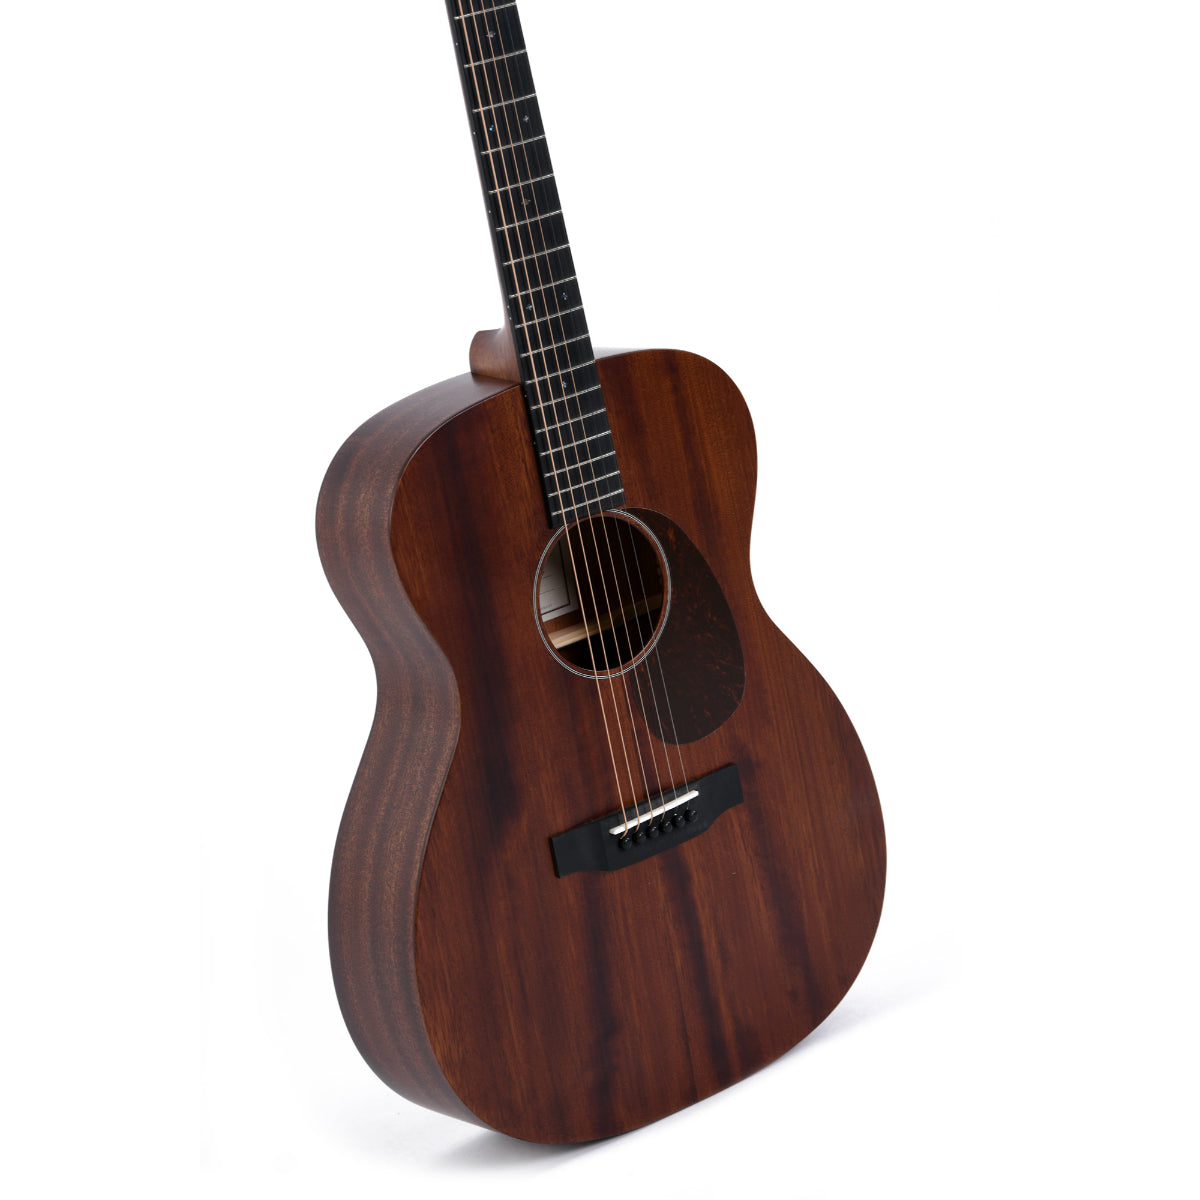 000M-15+ Mahogany Acoustic Guitar